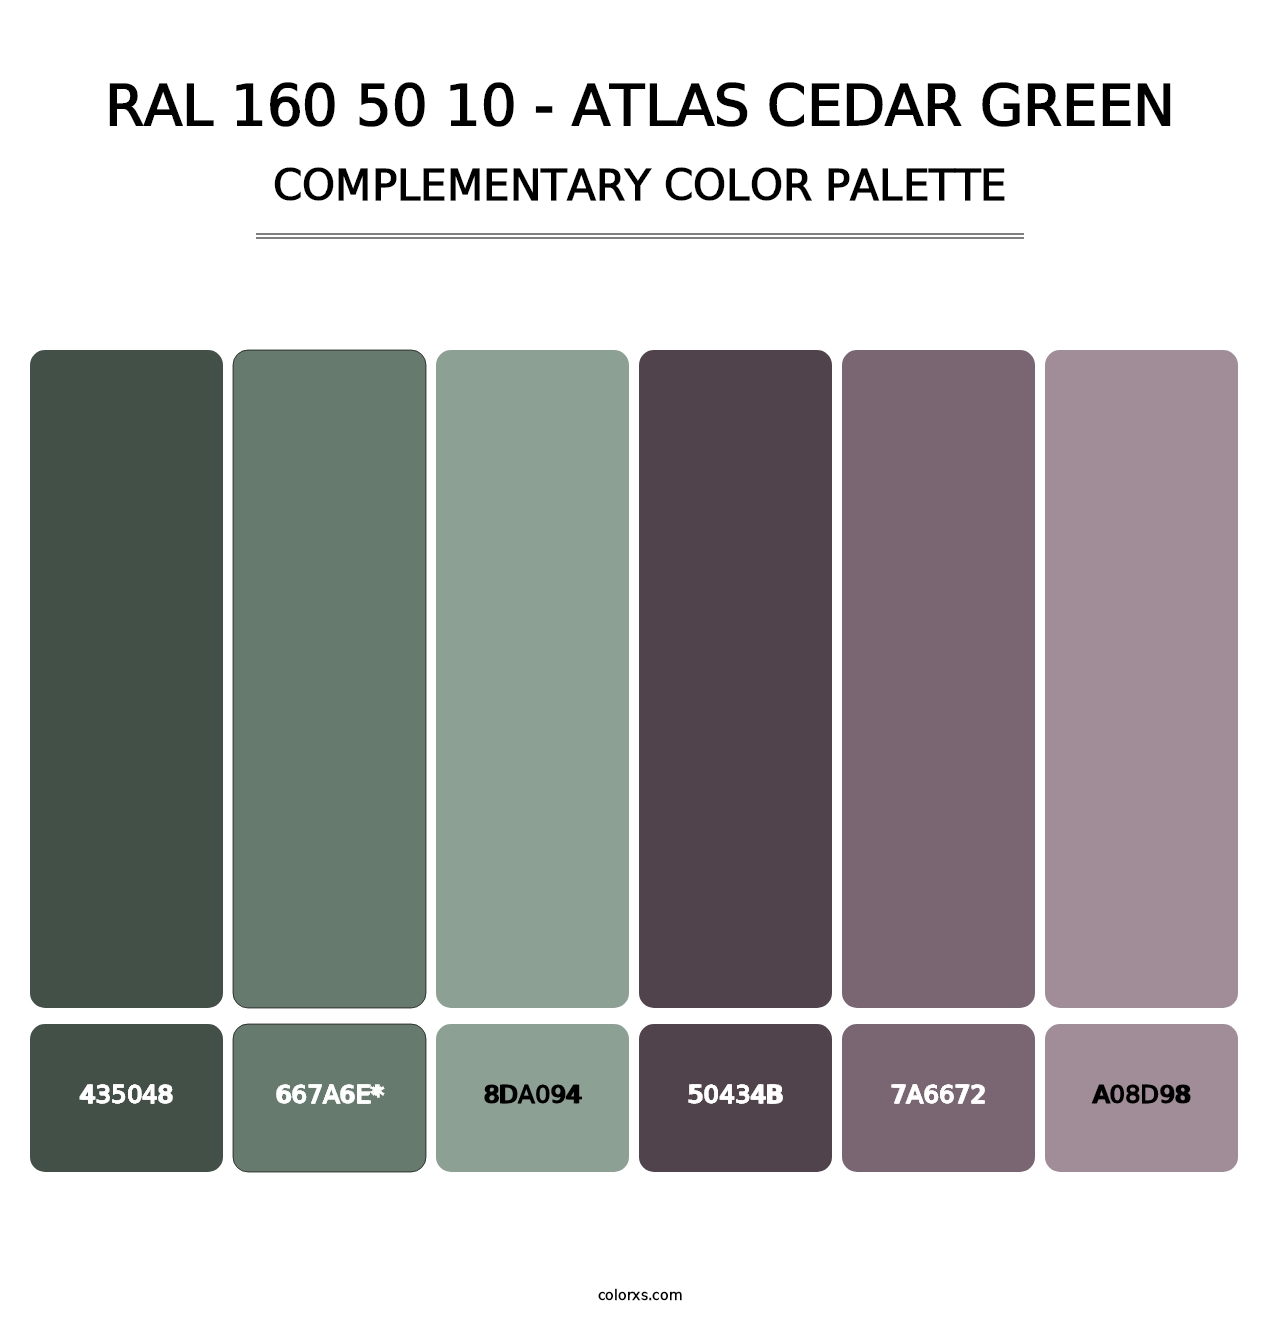 RAL 160 50 10 - Atlas Cedar Green - Complementary Color Palette